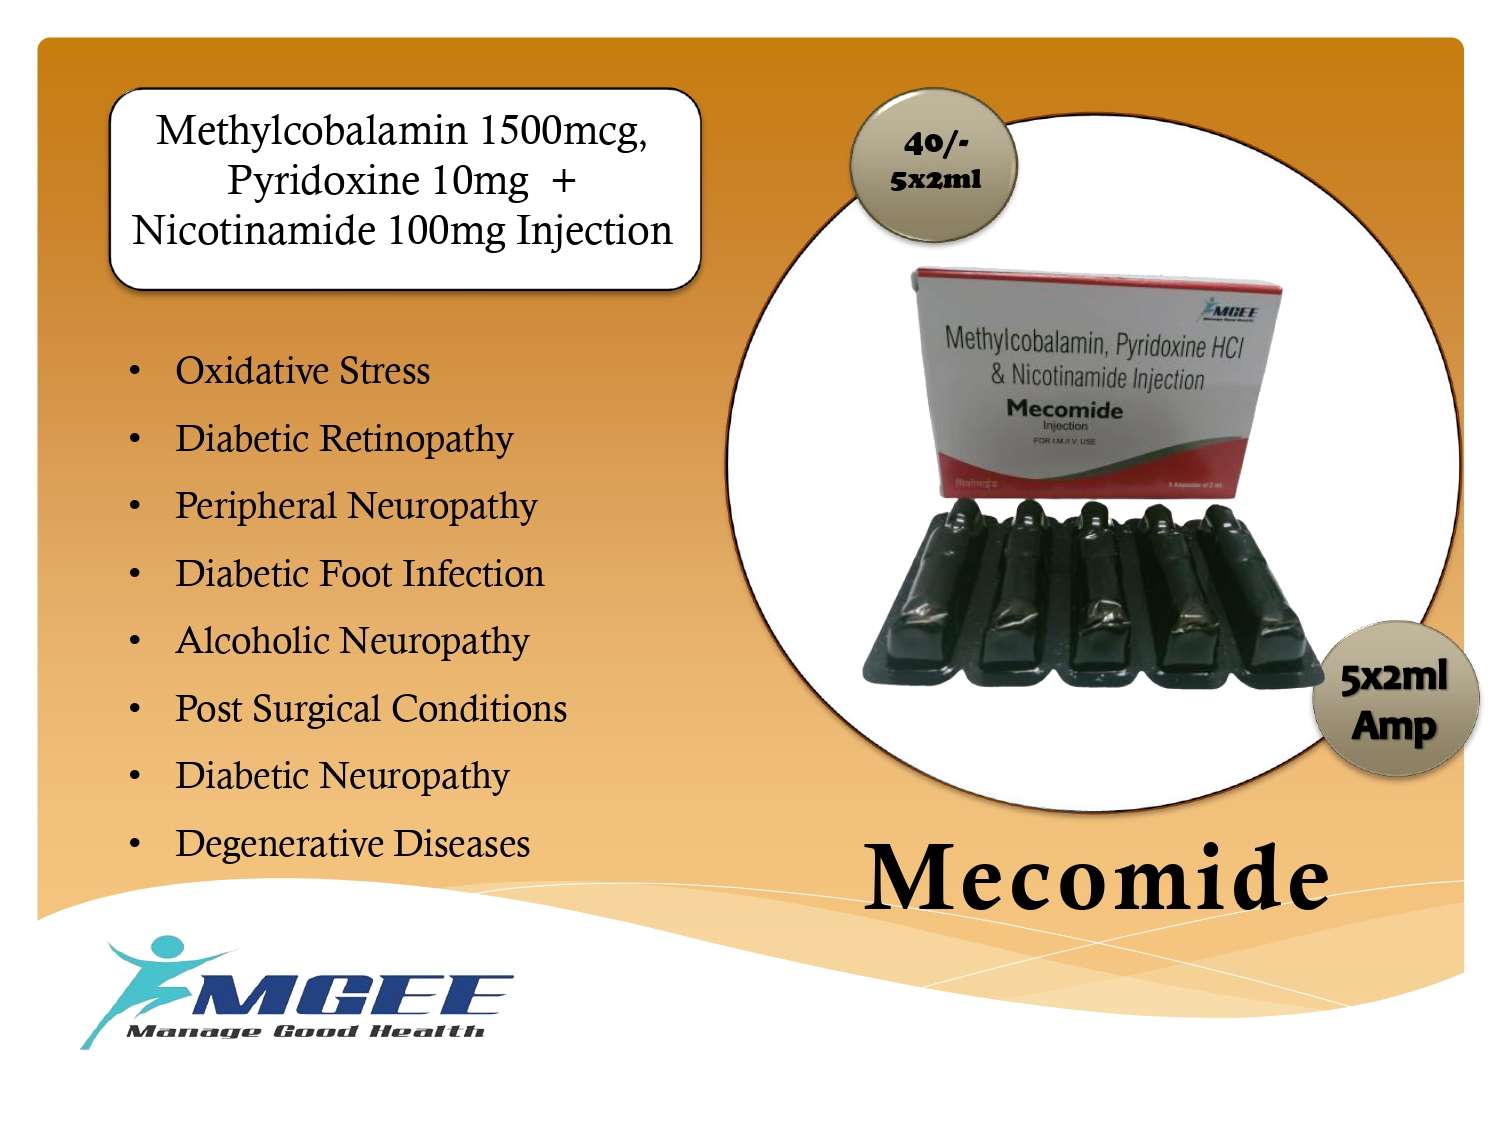 mecobalamin 1500 mcg pyridoxine 10 mg + niacinamide 100 mg